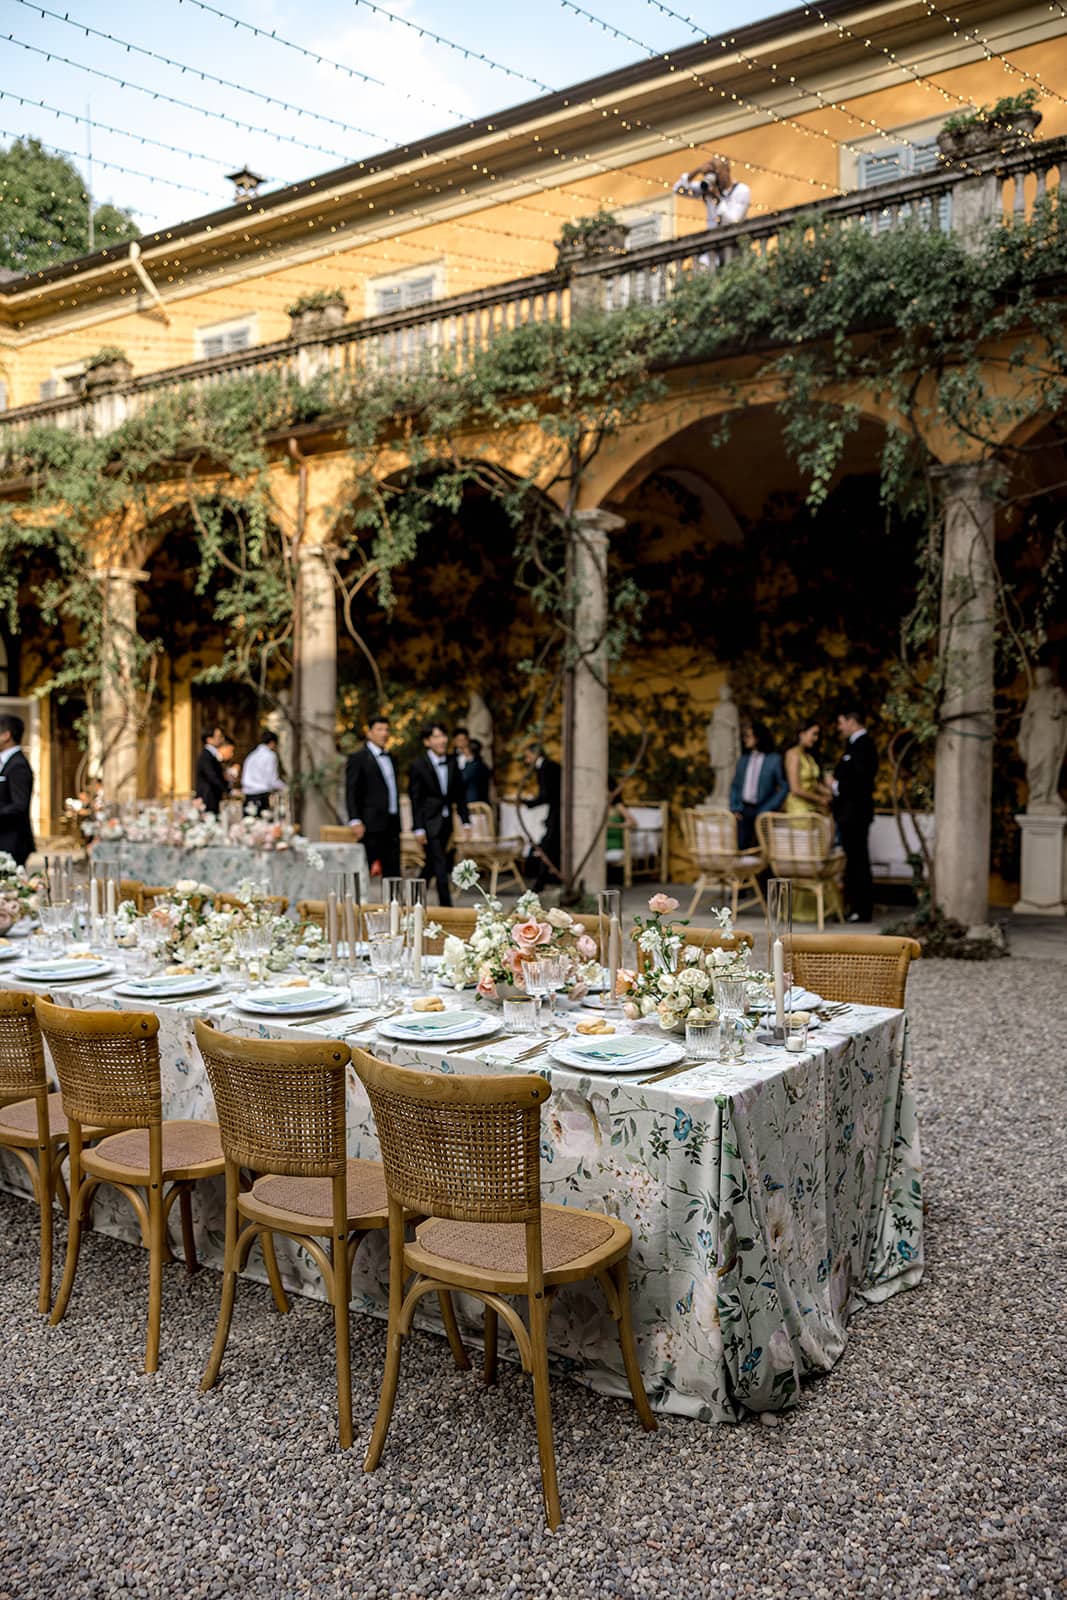 Villa Gastel wedding reception decor